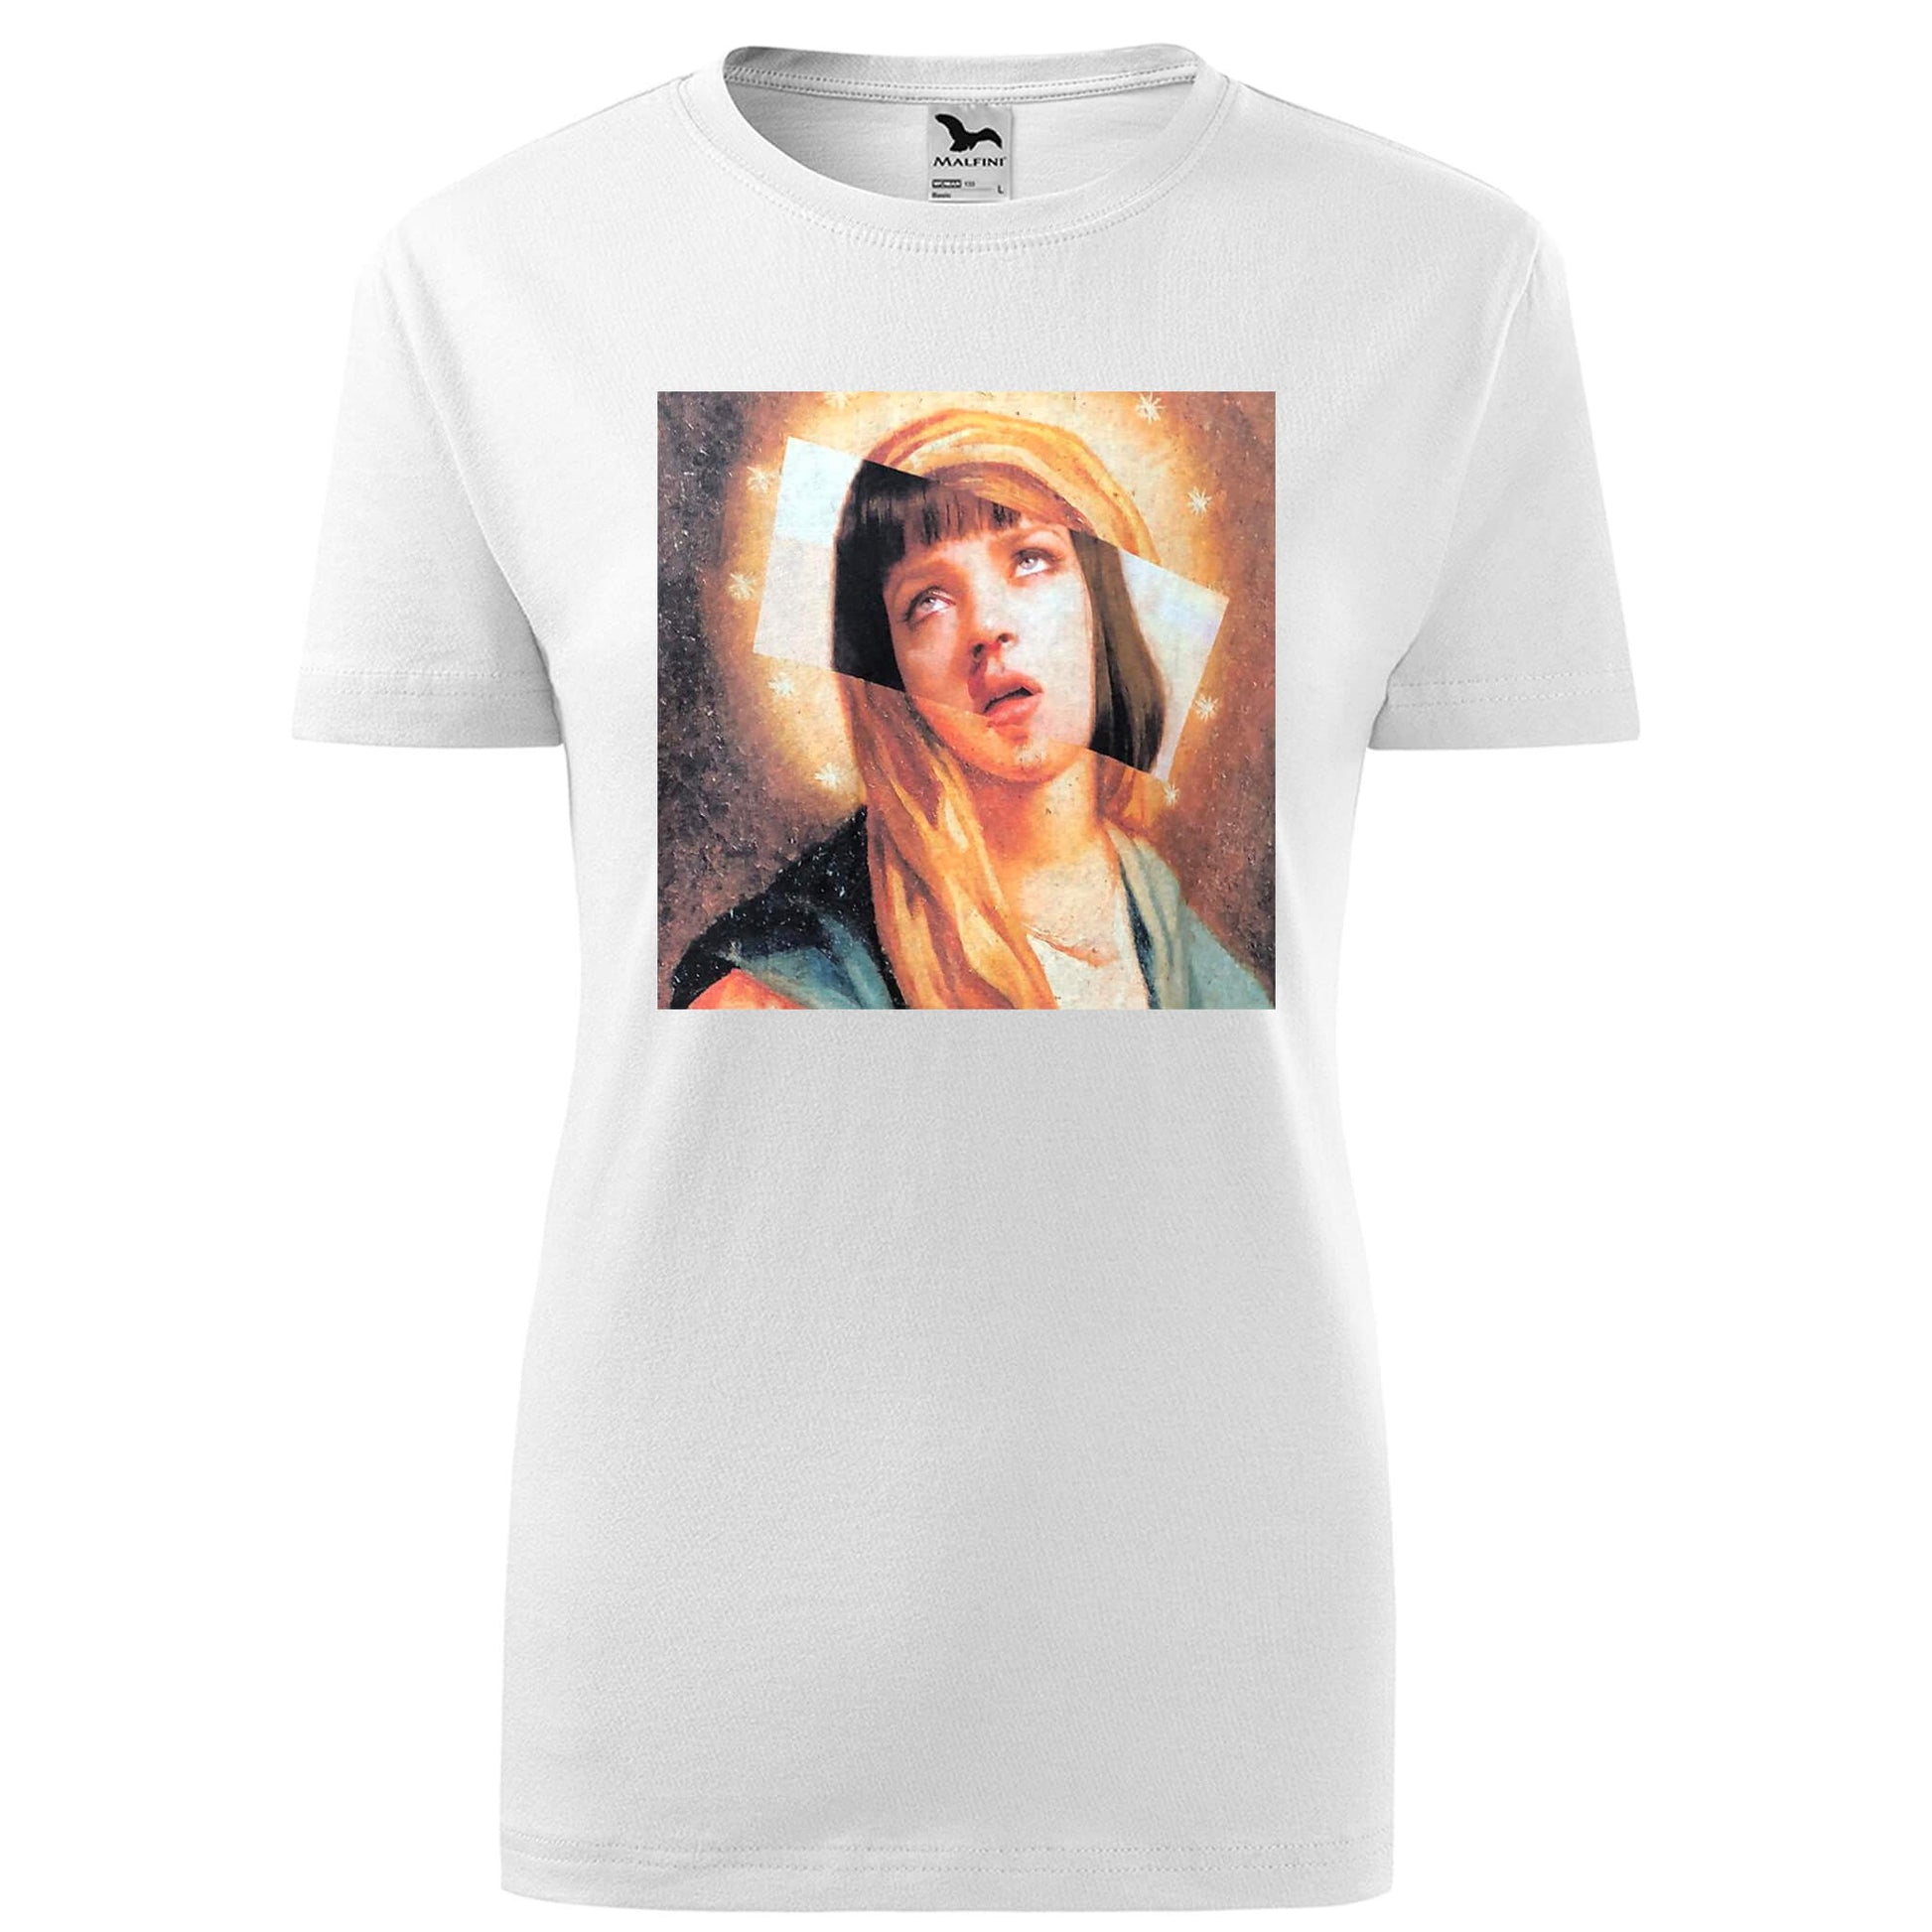 Virgin mia wallace t-shirt - rvdesignprint